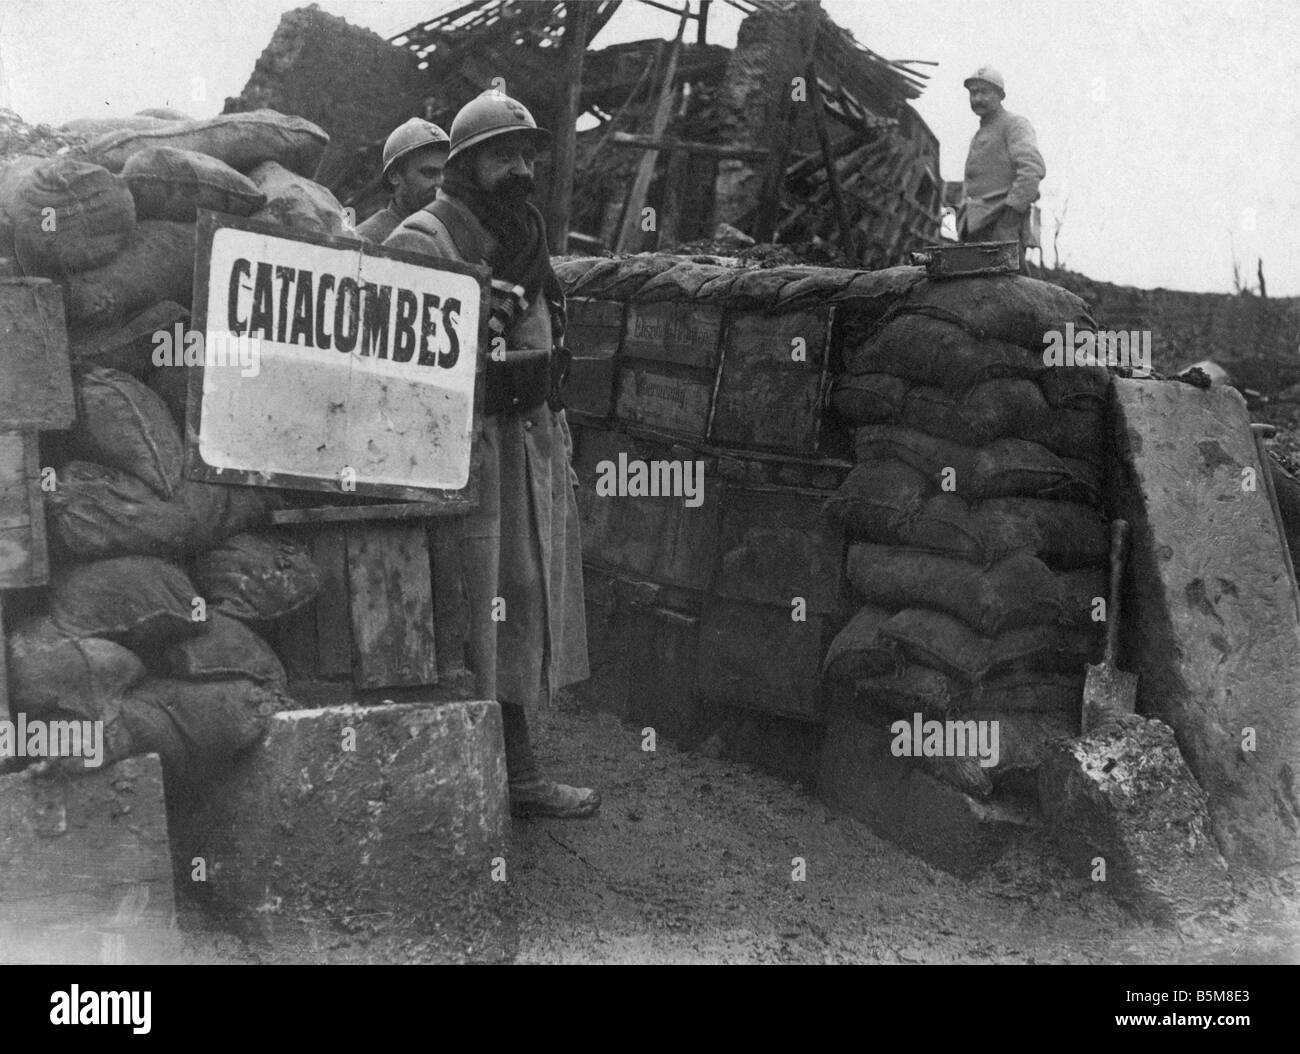 2 G55 F1 1916 62 WW1 trincee francese Somme Foto Storia Guerra Mondiale 1 Francia Battaglia delle Somme soldati francesi all'ingresso Foto Stock